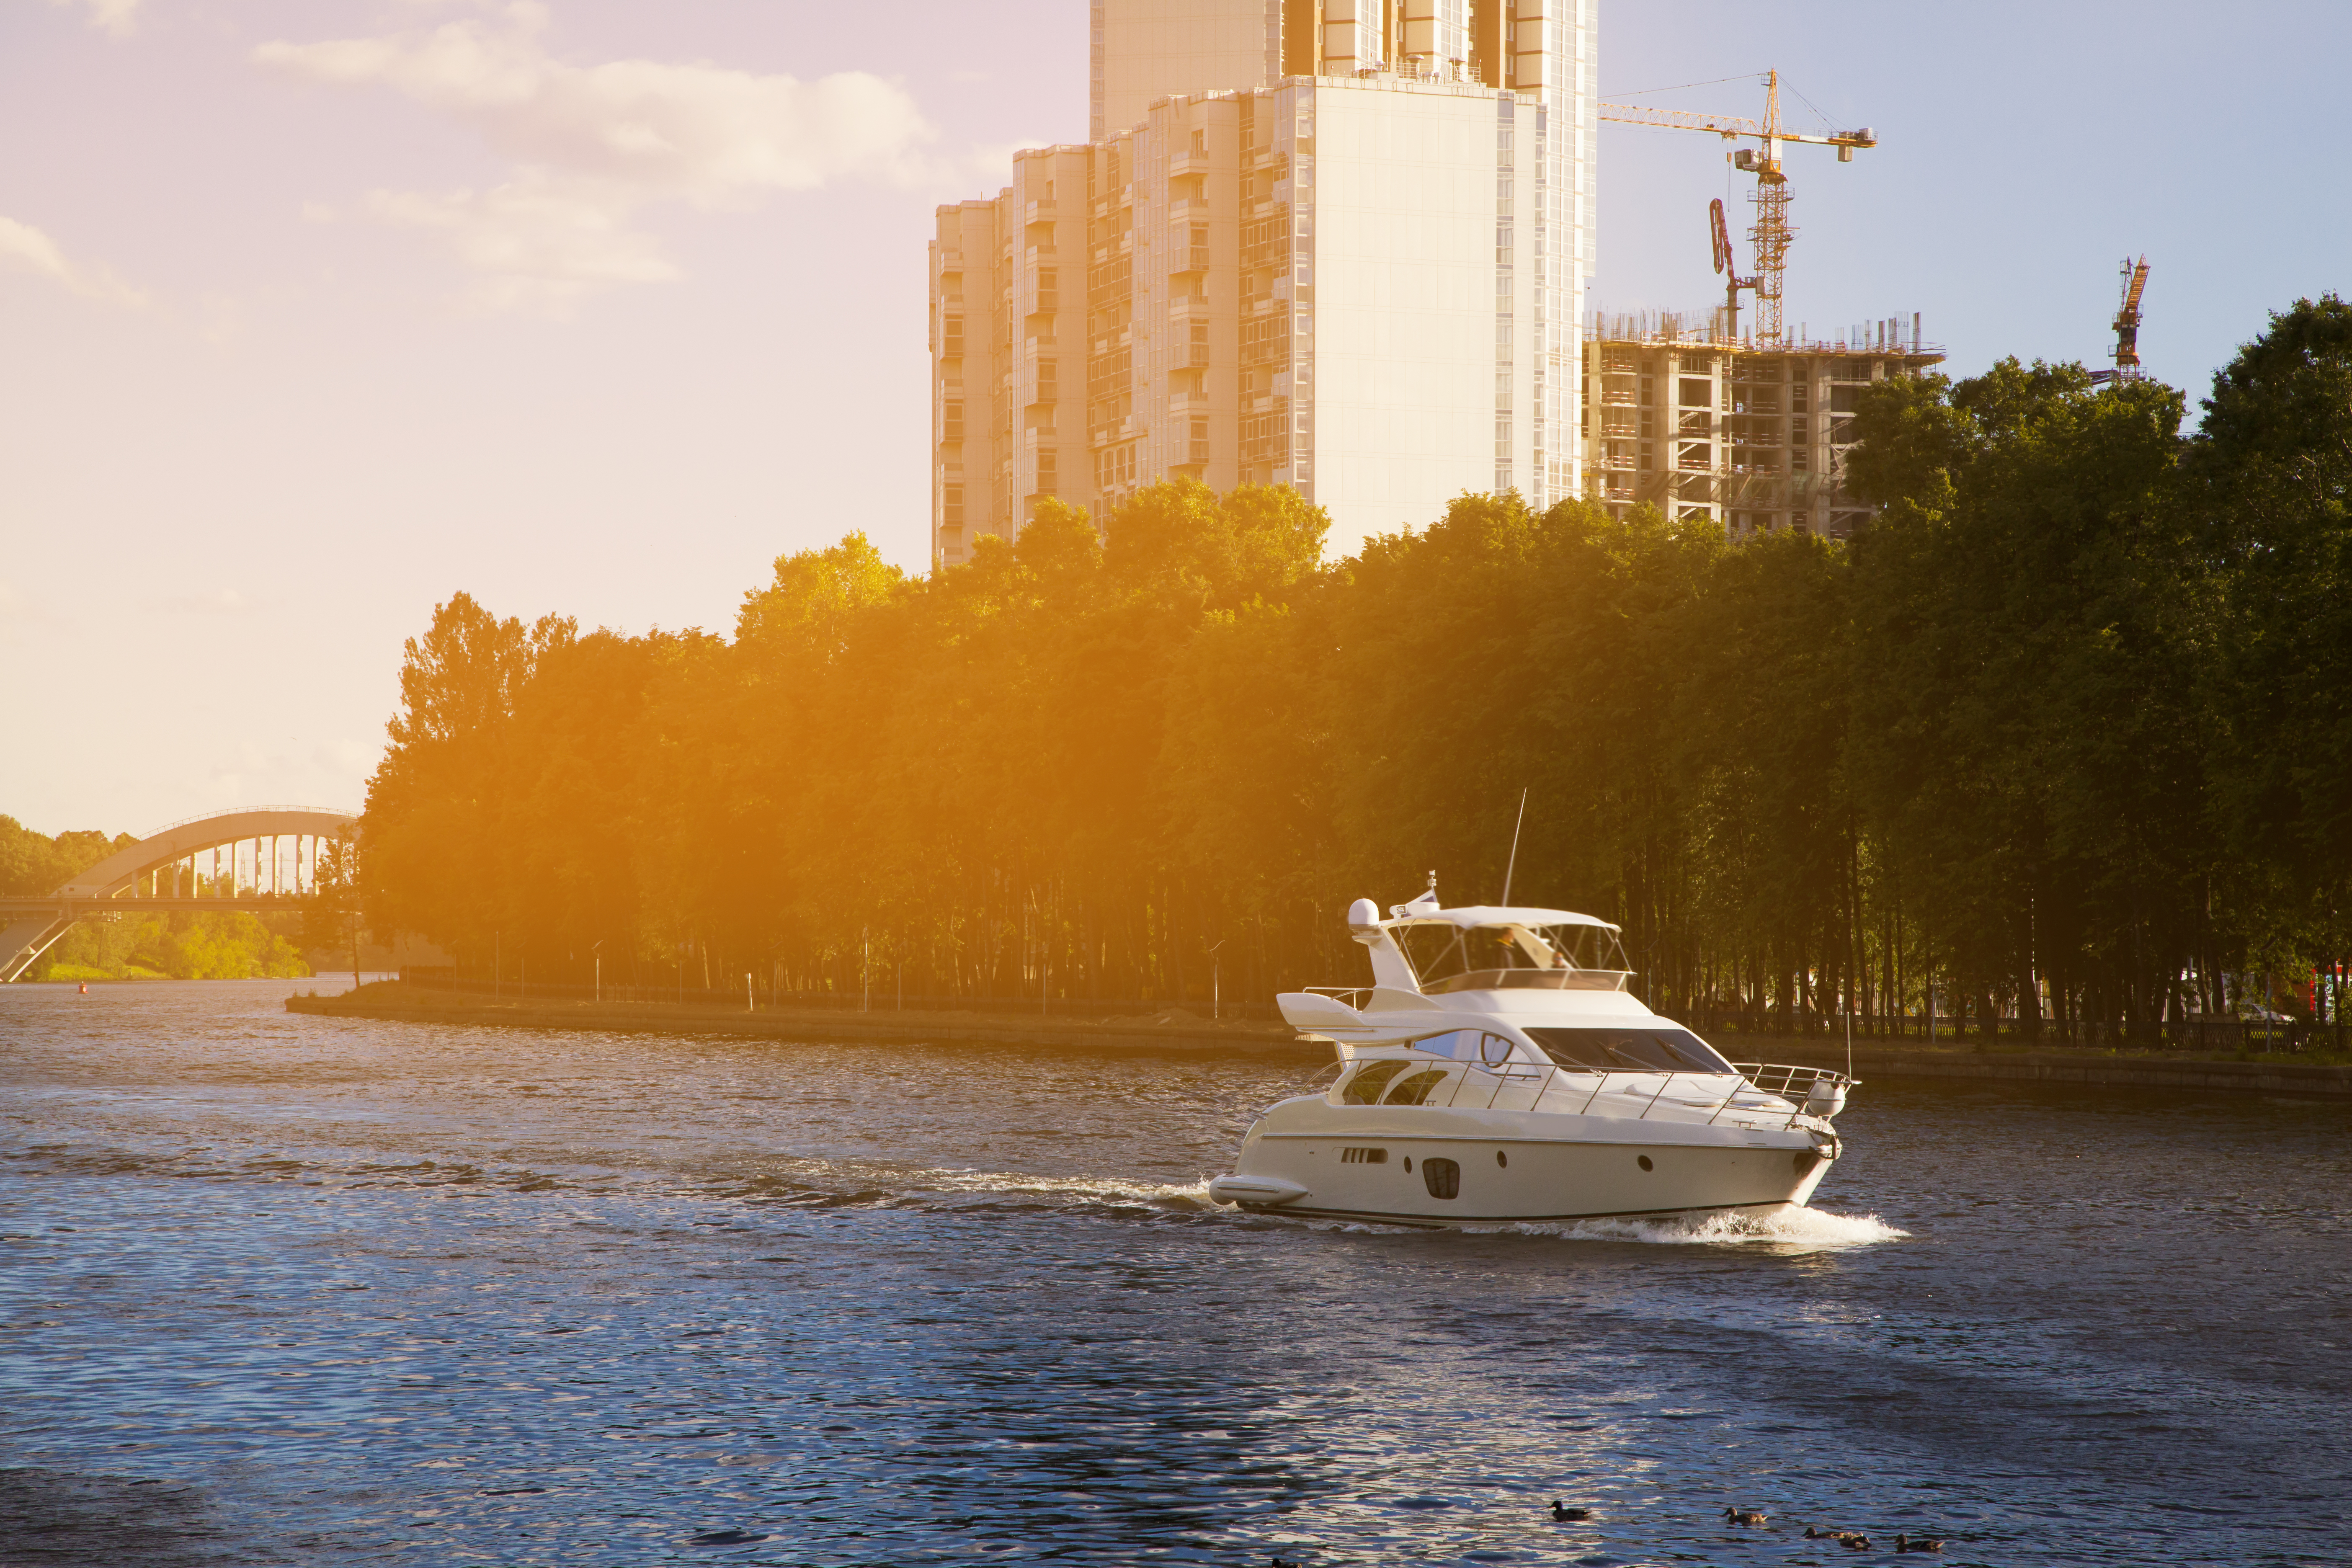 Luxury private boat | Source: Shutterstock.com